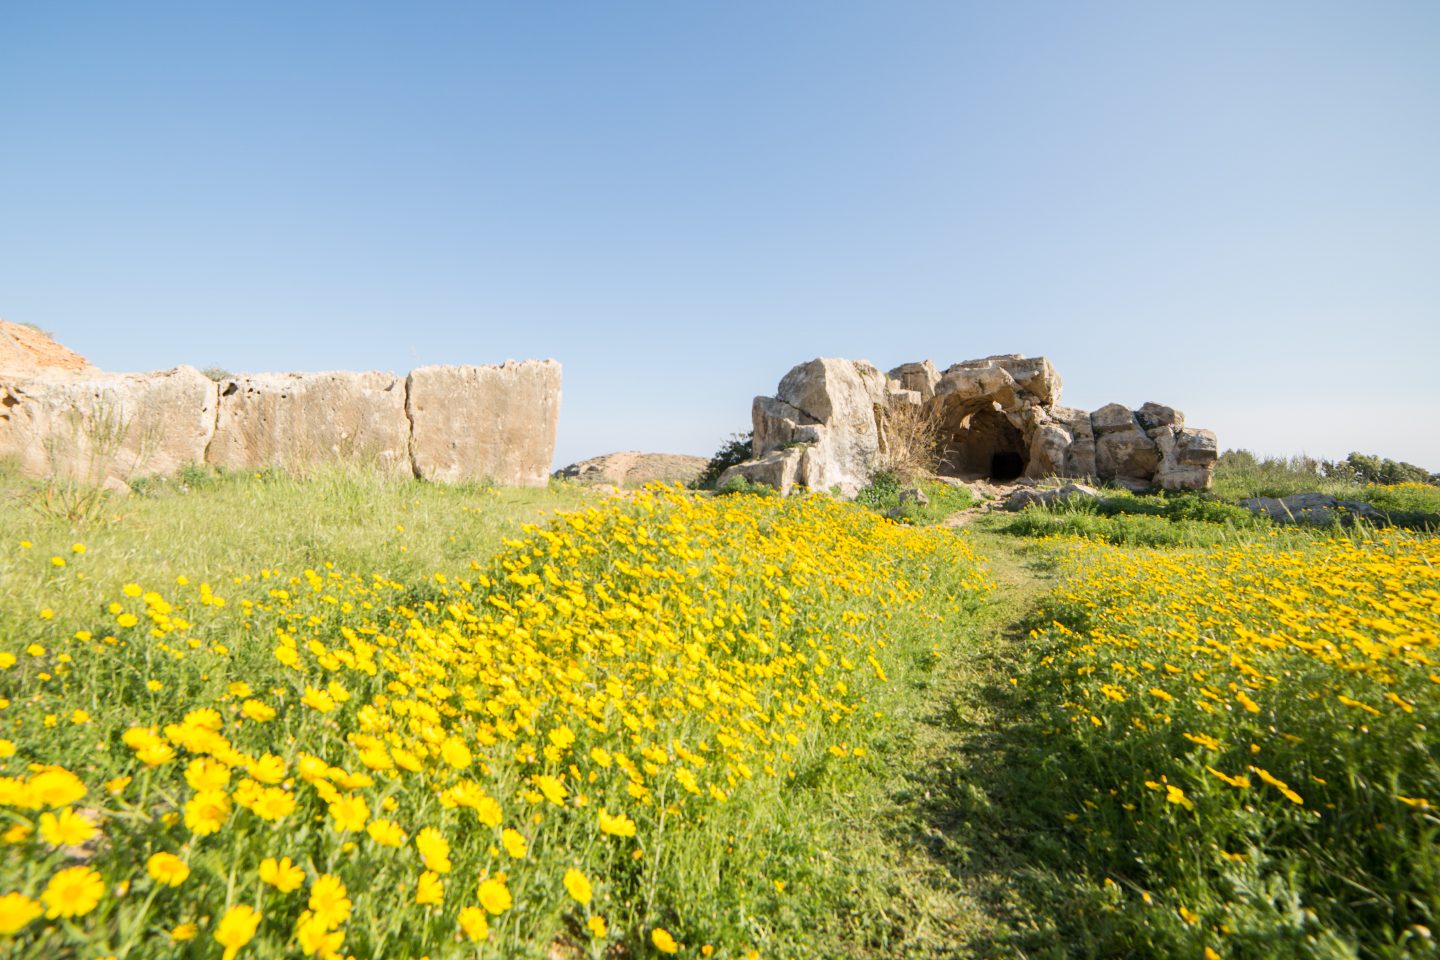 Tombs of The Kings, Paphos - Cyprus